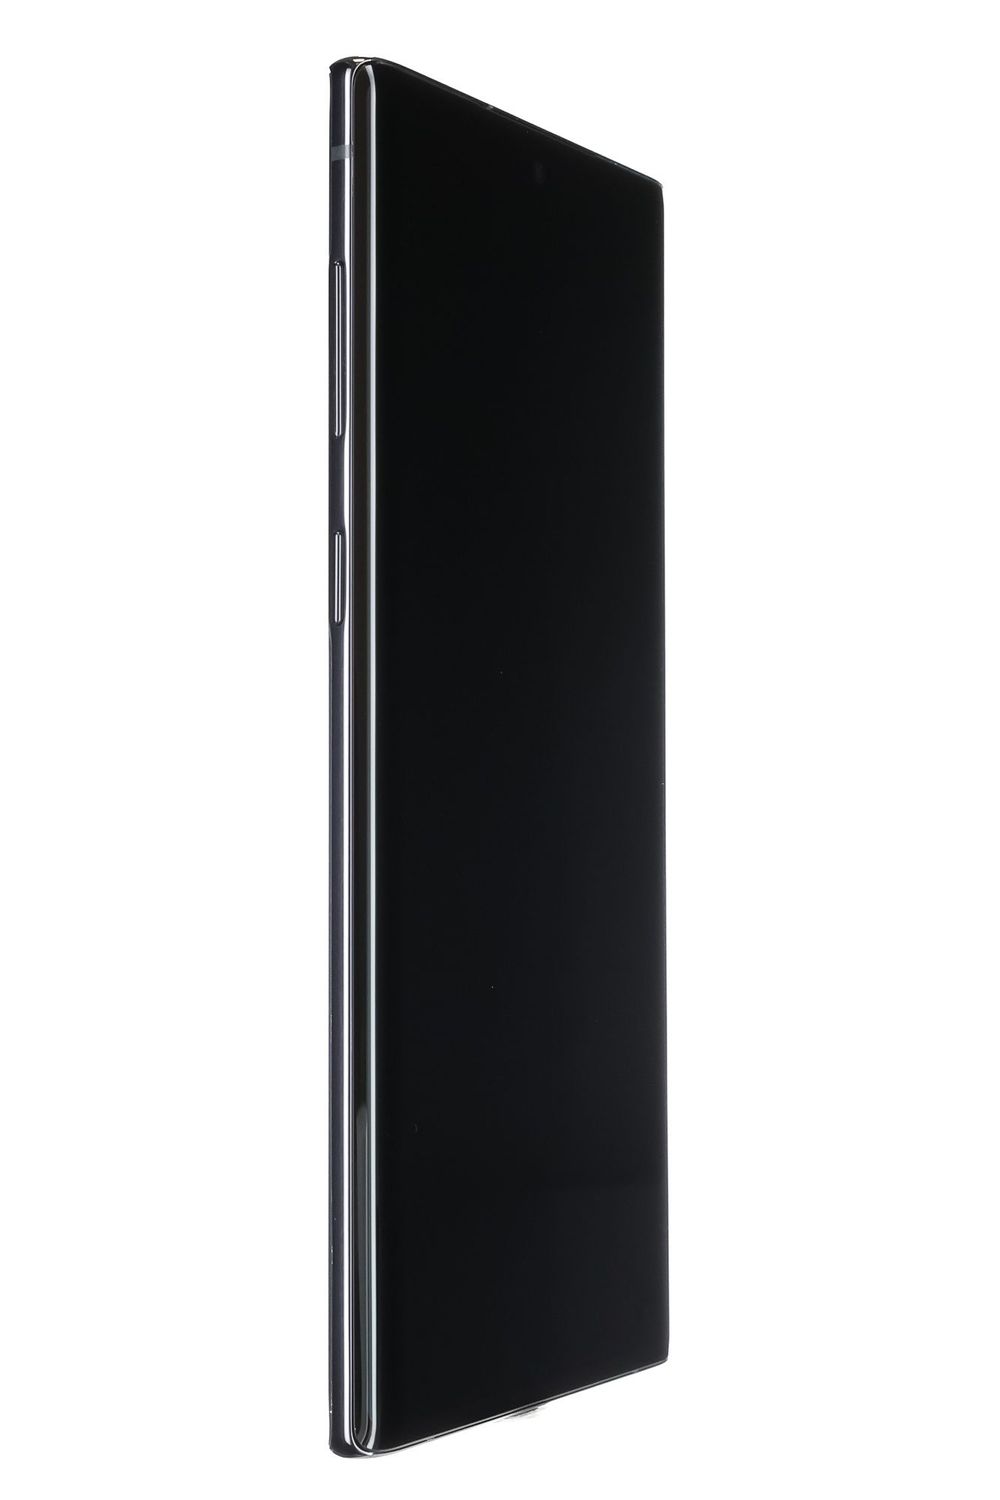 Mobiltelefon Samsung Galaxy Note 10 5G, Aura Black, 256 GB, Bun